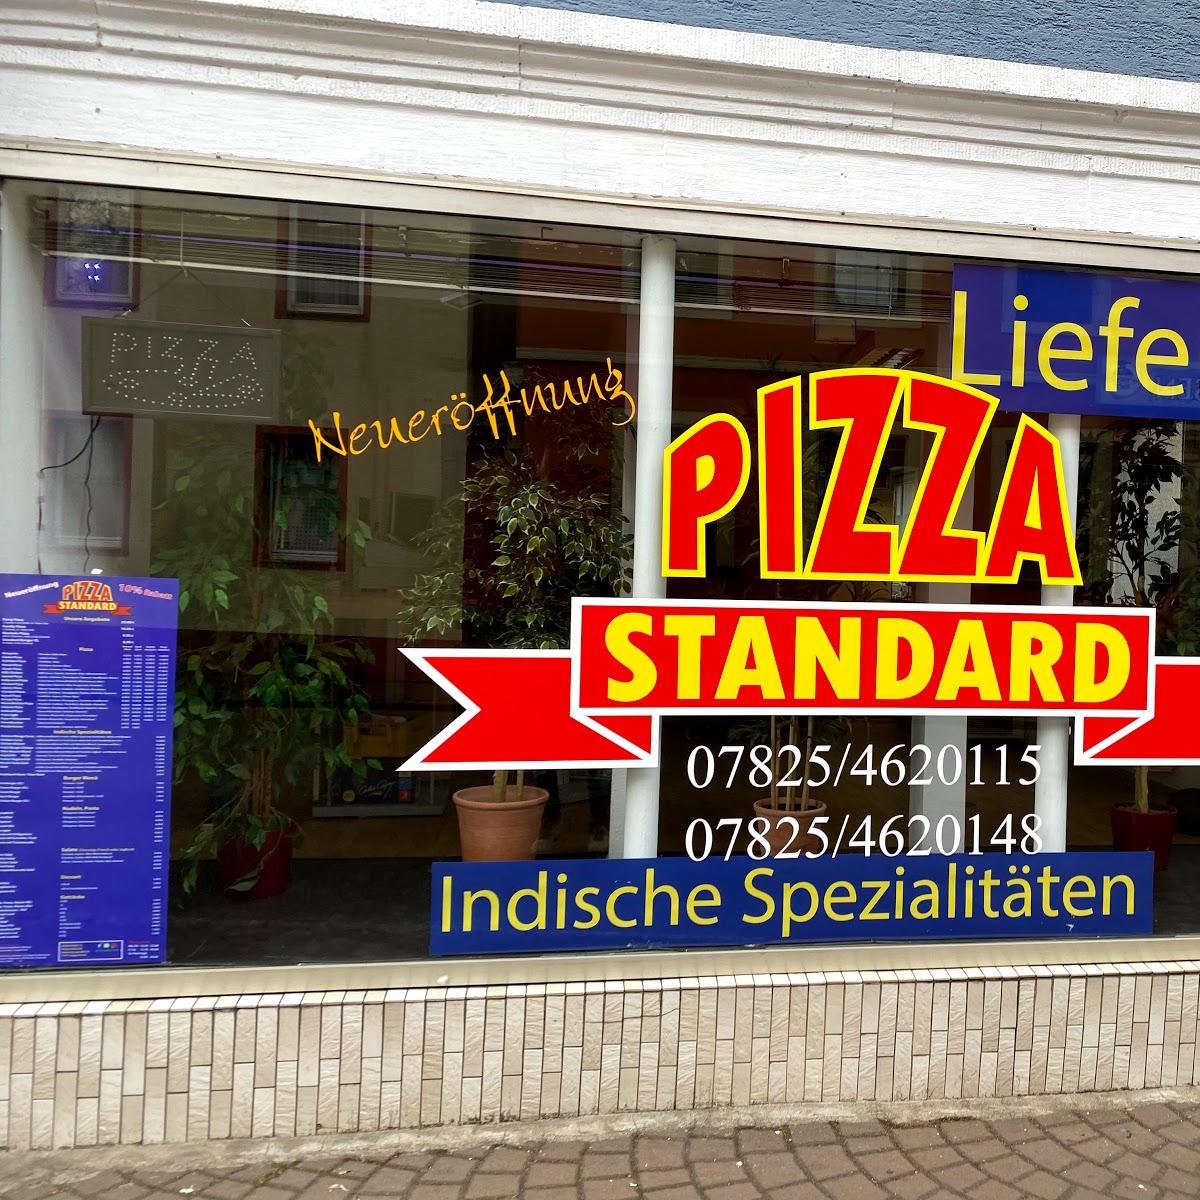 Restaurant "Pizza Standard" in Kippenheim